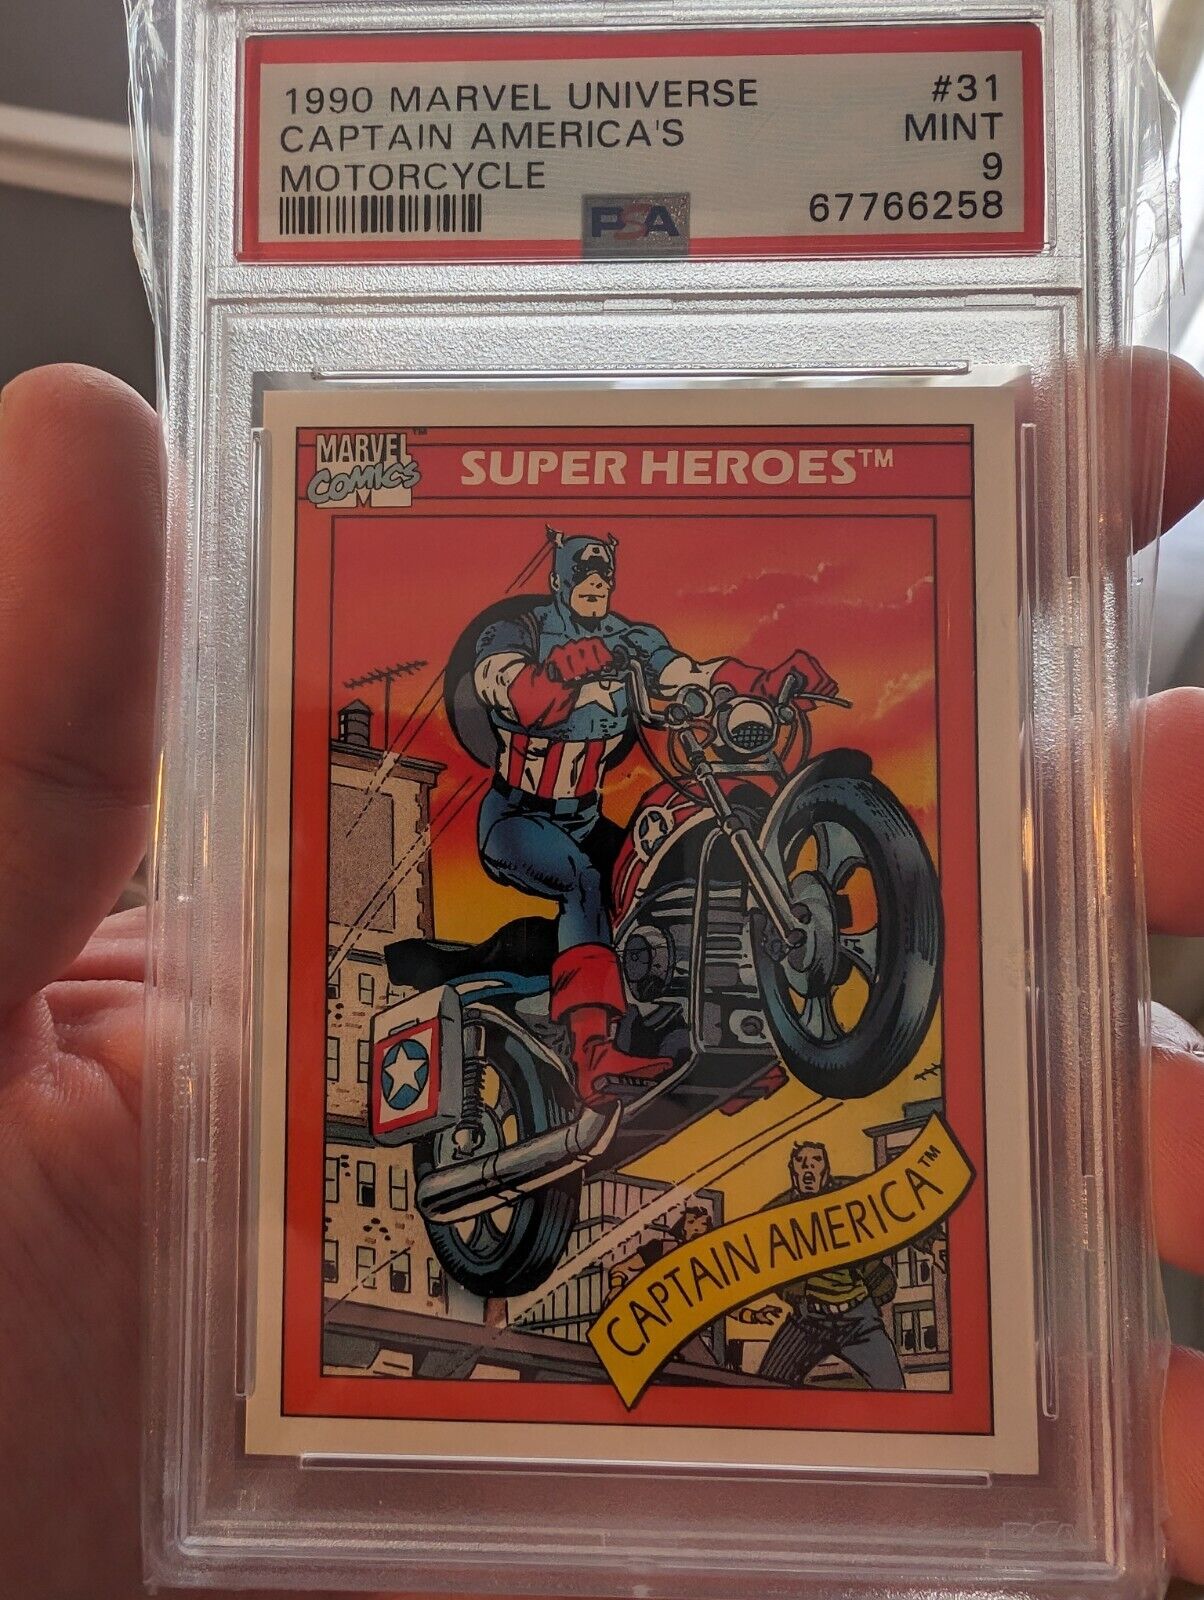 Captain America's Motorcycle 1990 Impel Marvel Universe #31 MINT PSA 9